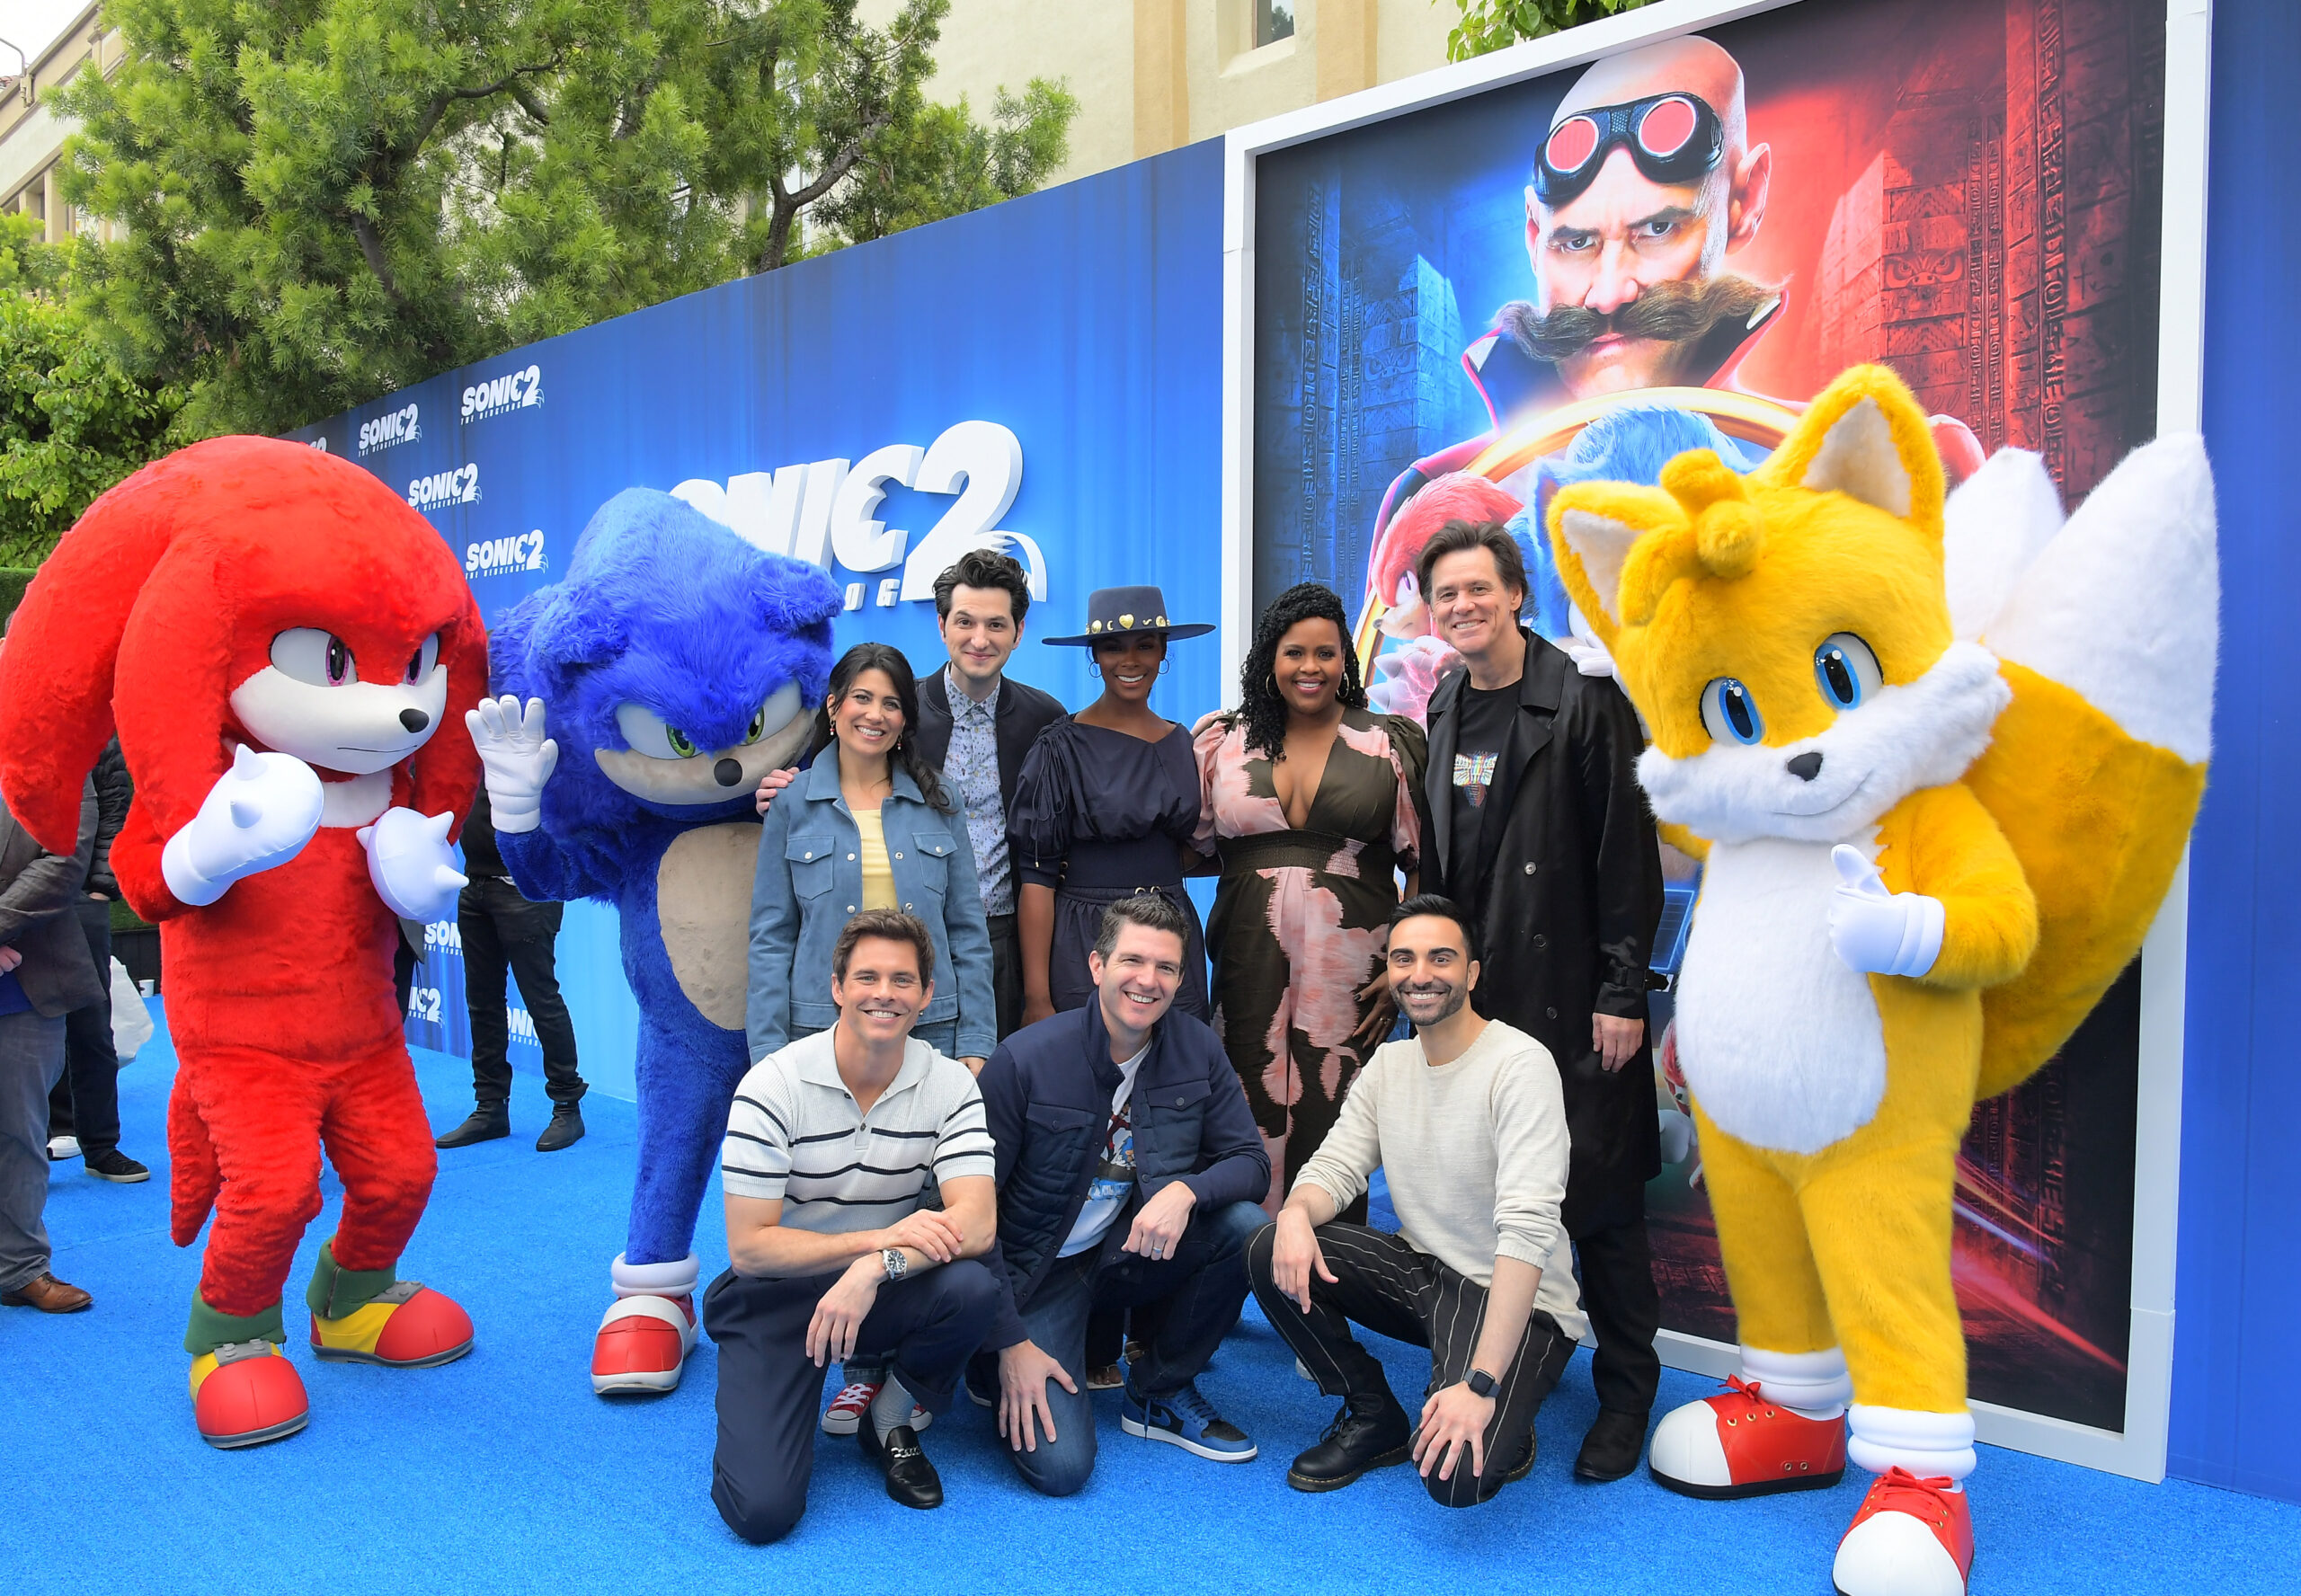 Sonic The Hedgehog 2' Los Angeles Premiere